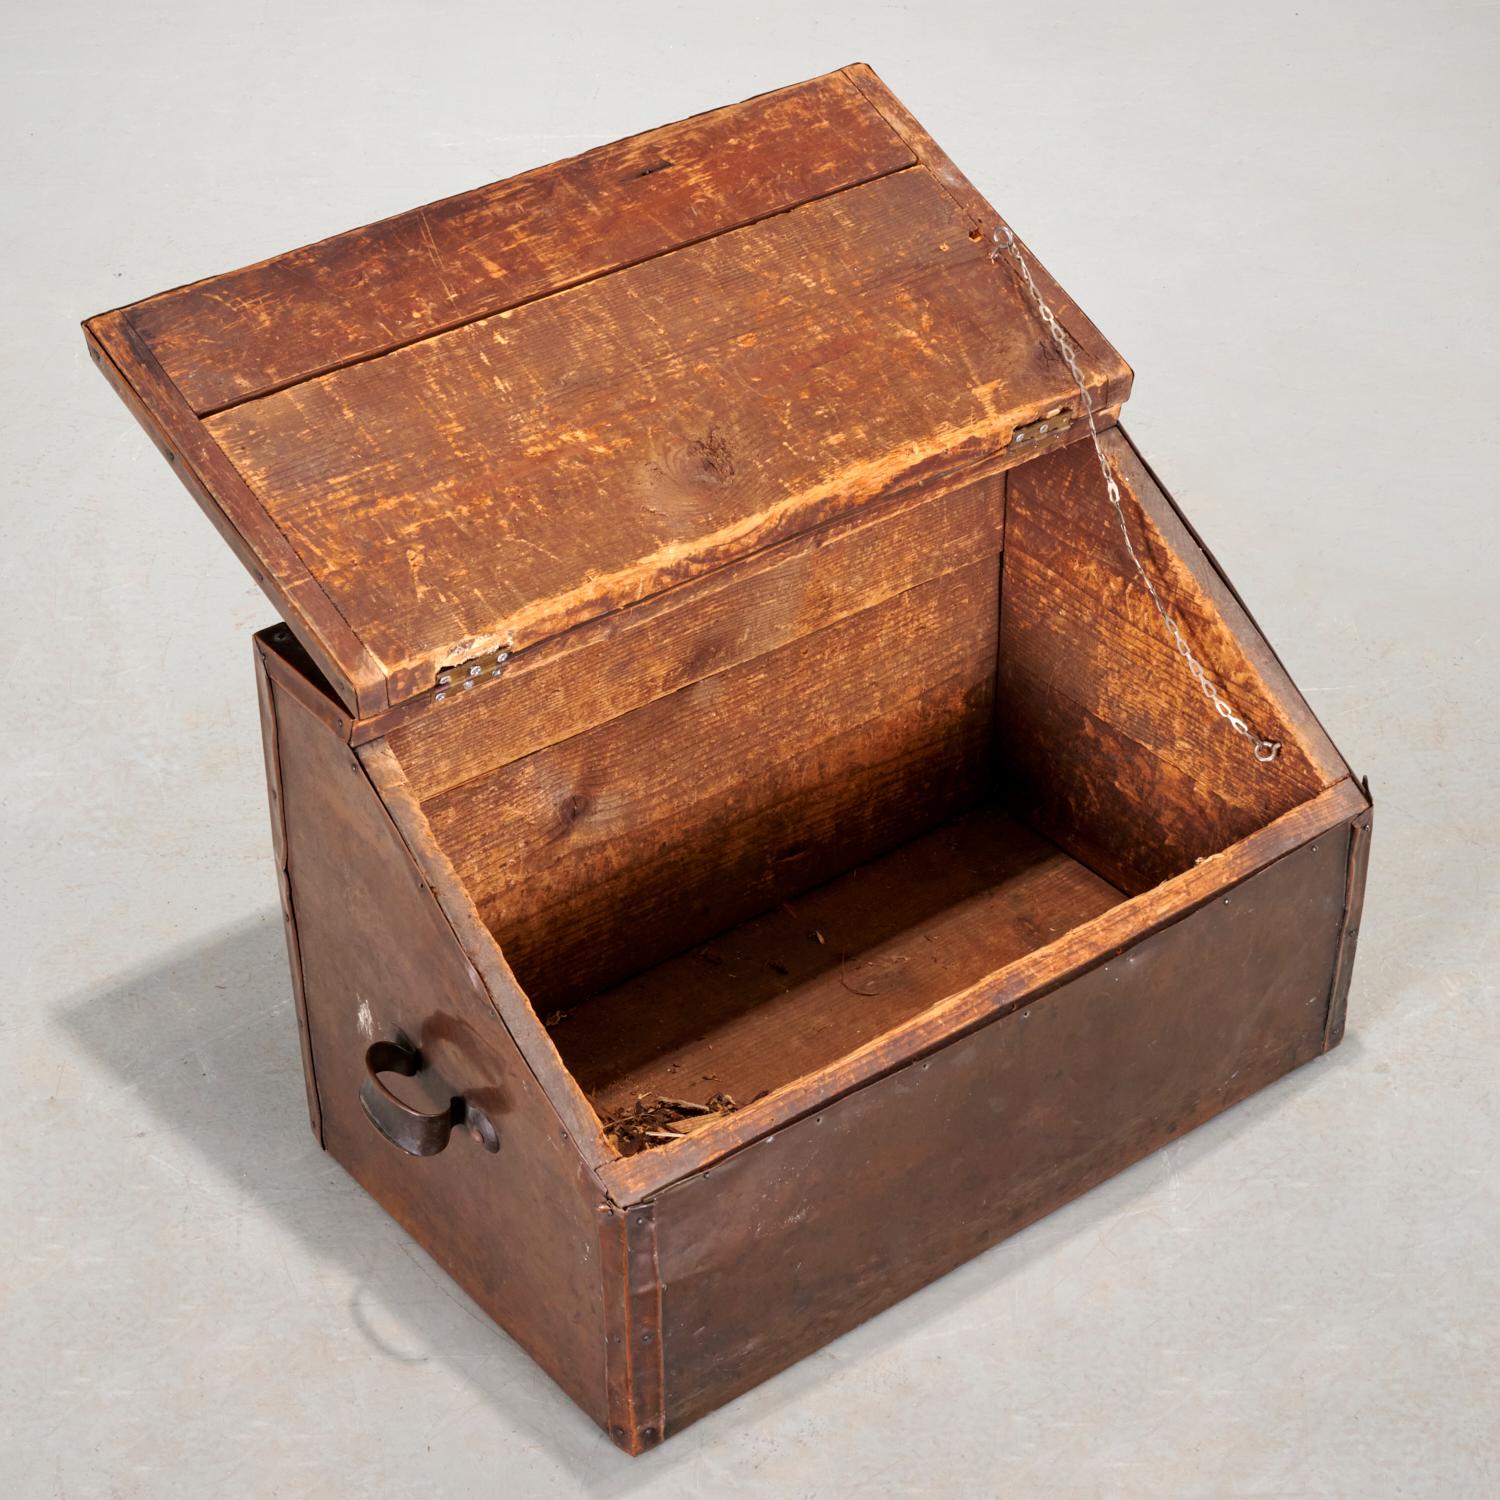 Anfang 20. Jh. Liberty & Co. Arts and Crafts Log Box, einst im Besitz von Hollywood Star im Angebot 1